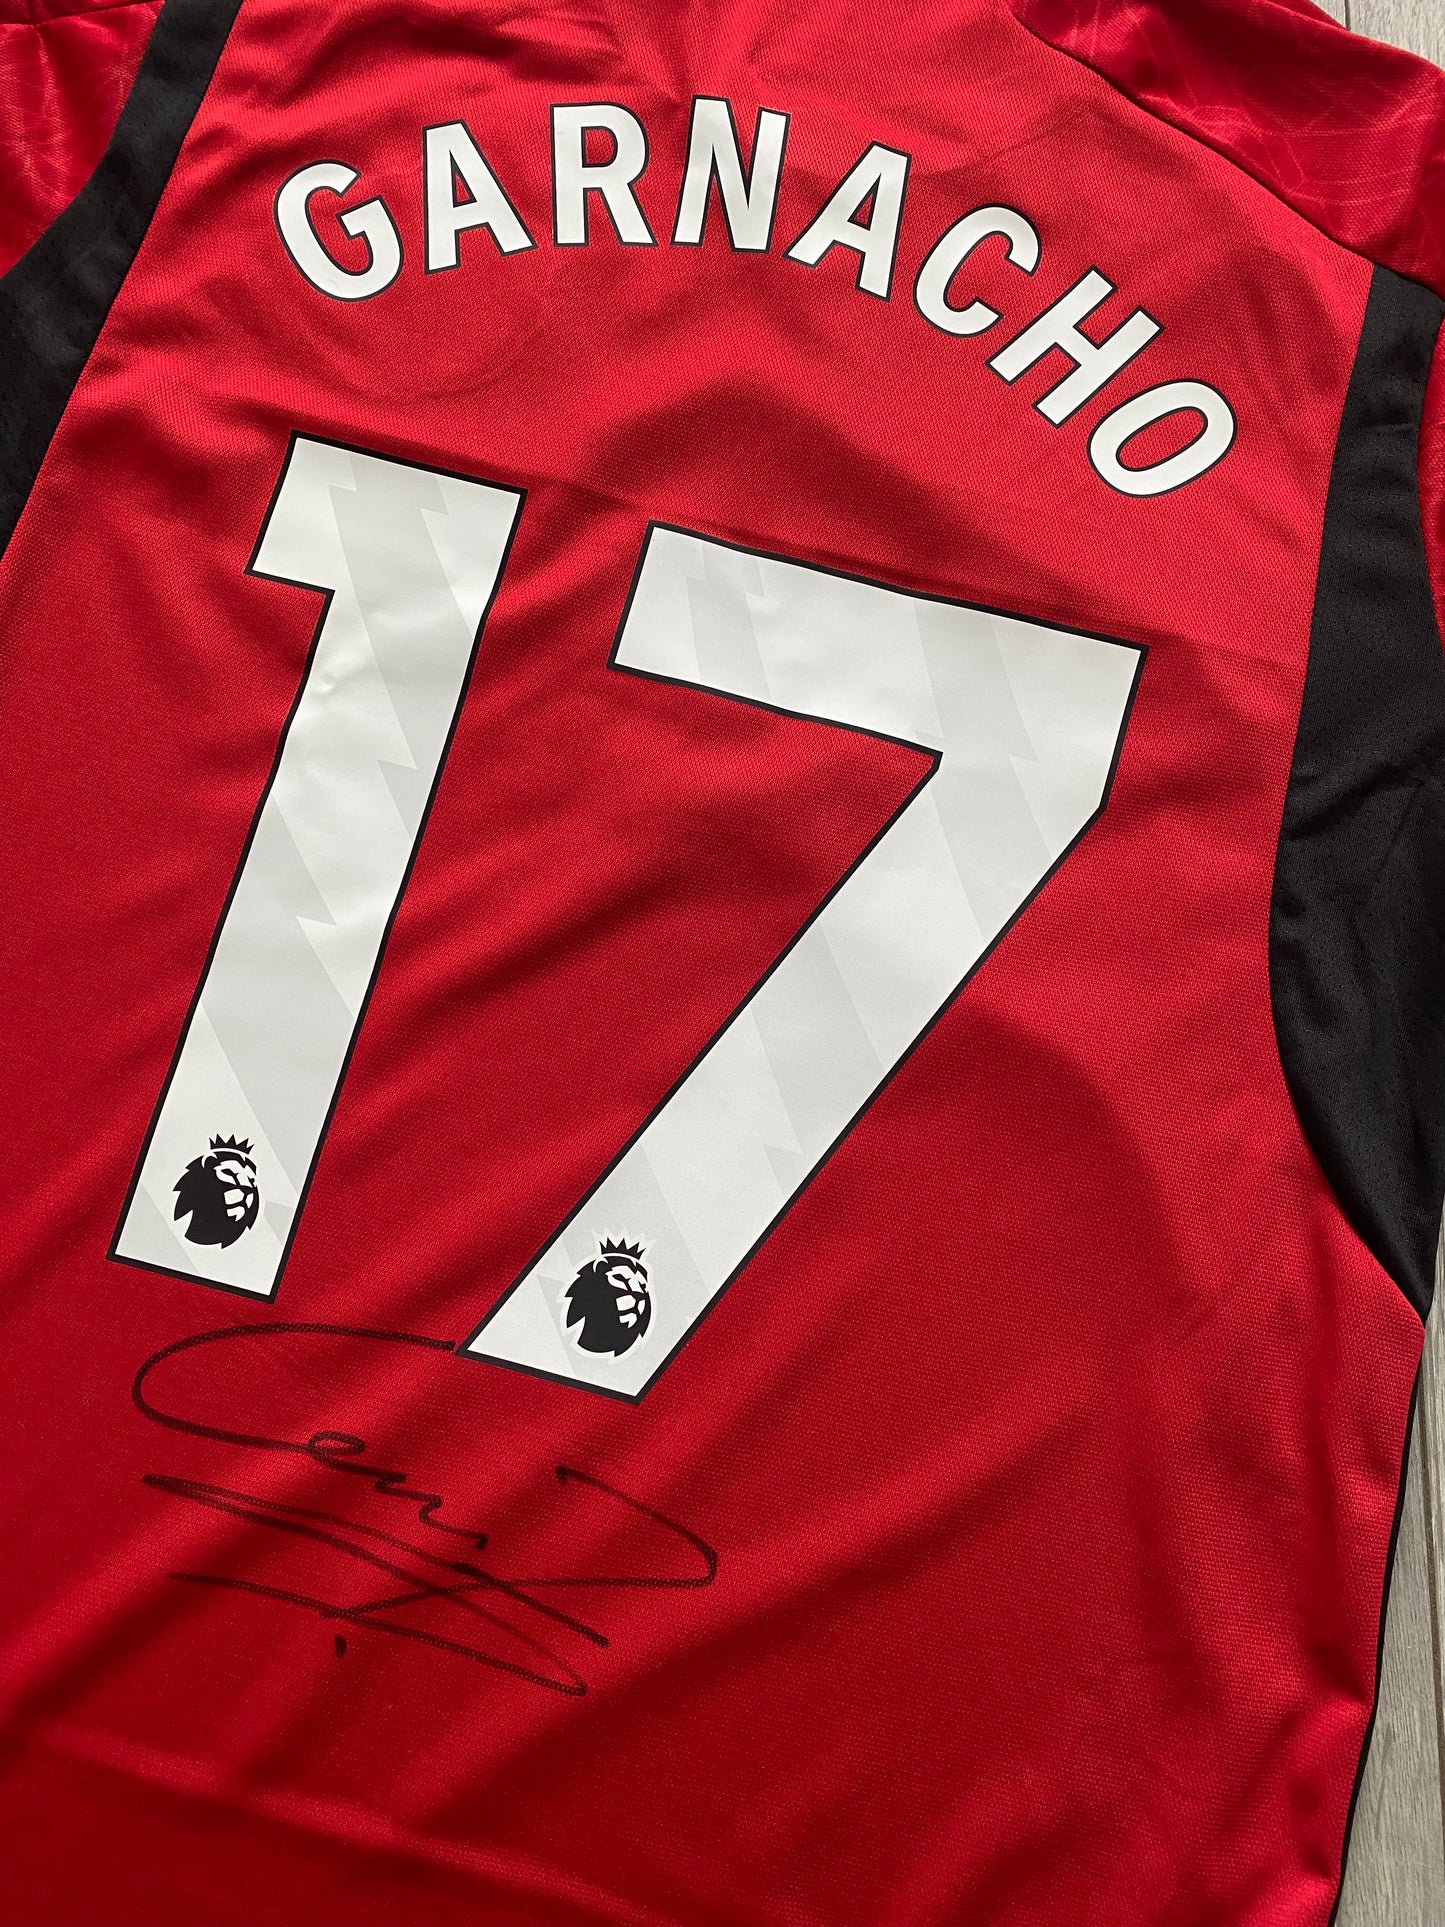 Alejandro Garnacho - Manchester United hand-signed replica shirt - memorabilia, football shirt (UNFRAMED)